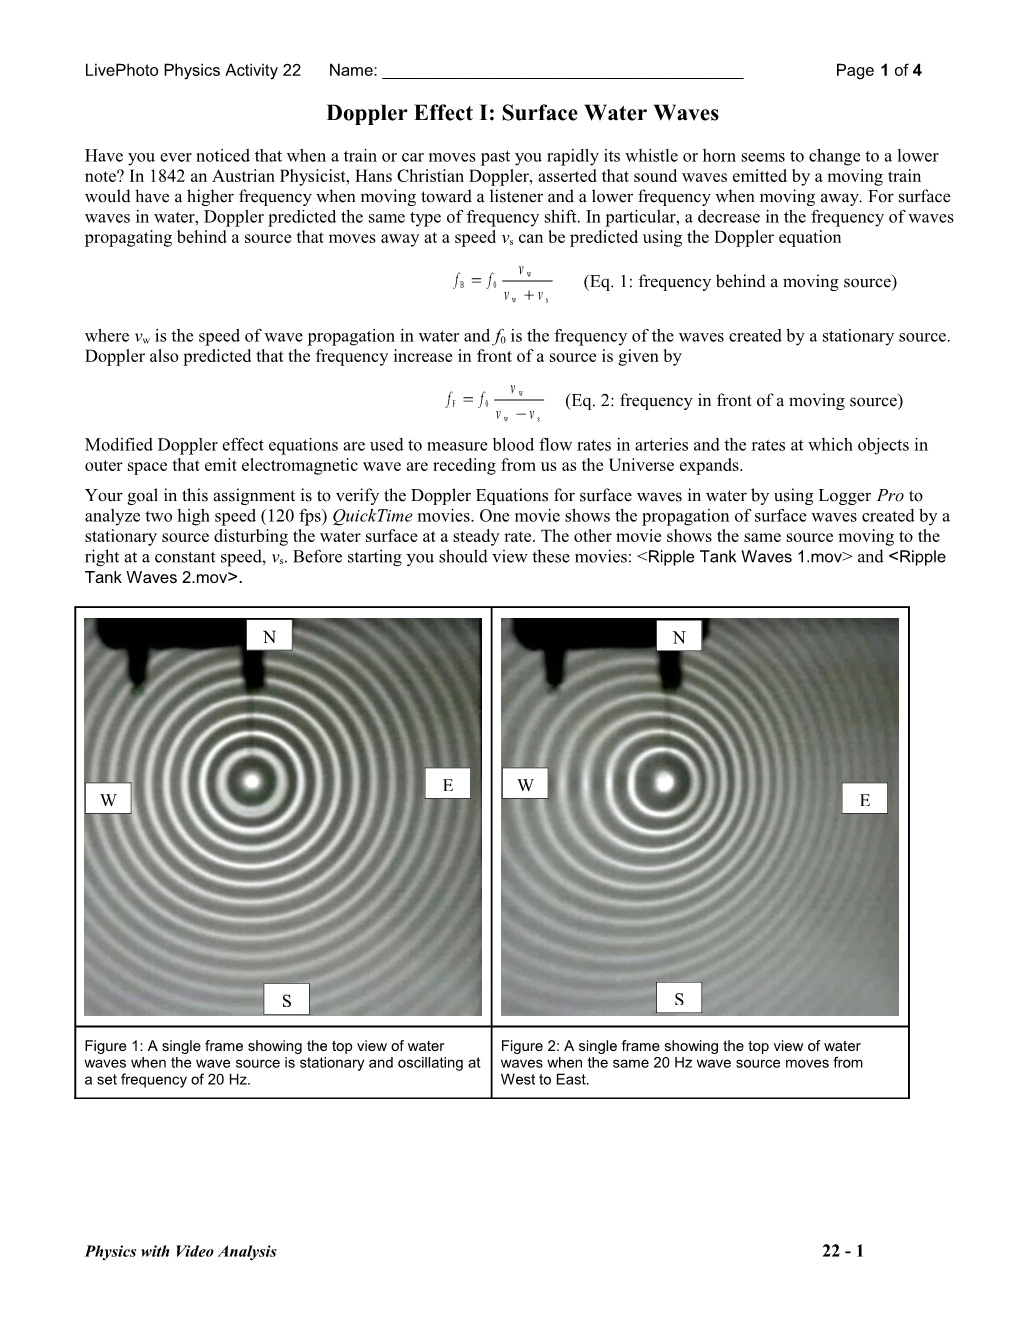 Doppler Effect I: Surface Water Waves